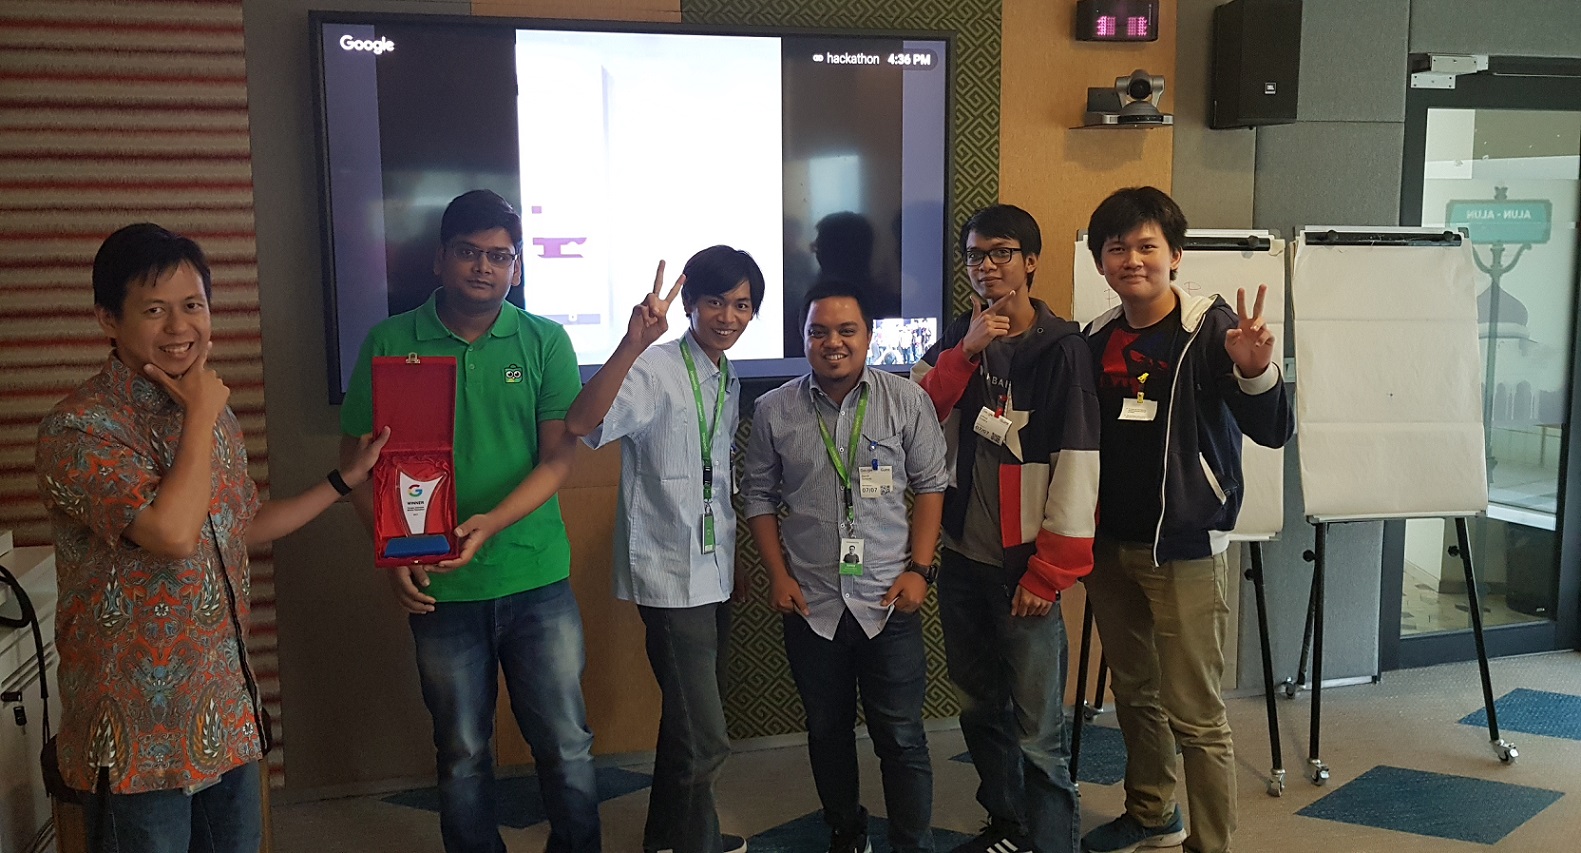 Tokopedia wins Google Indonesia hackathon